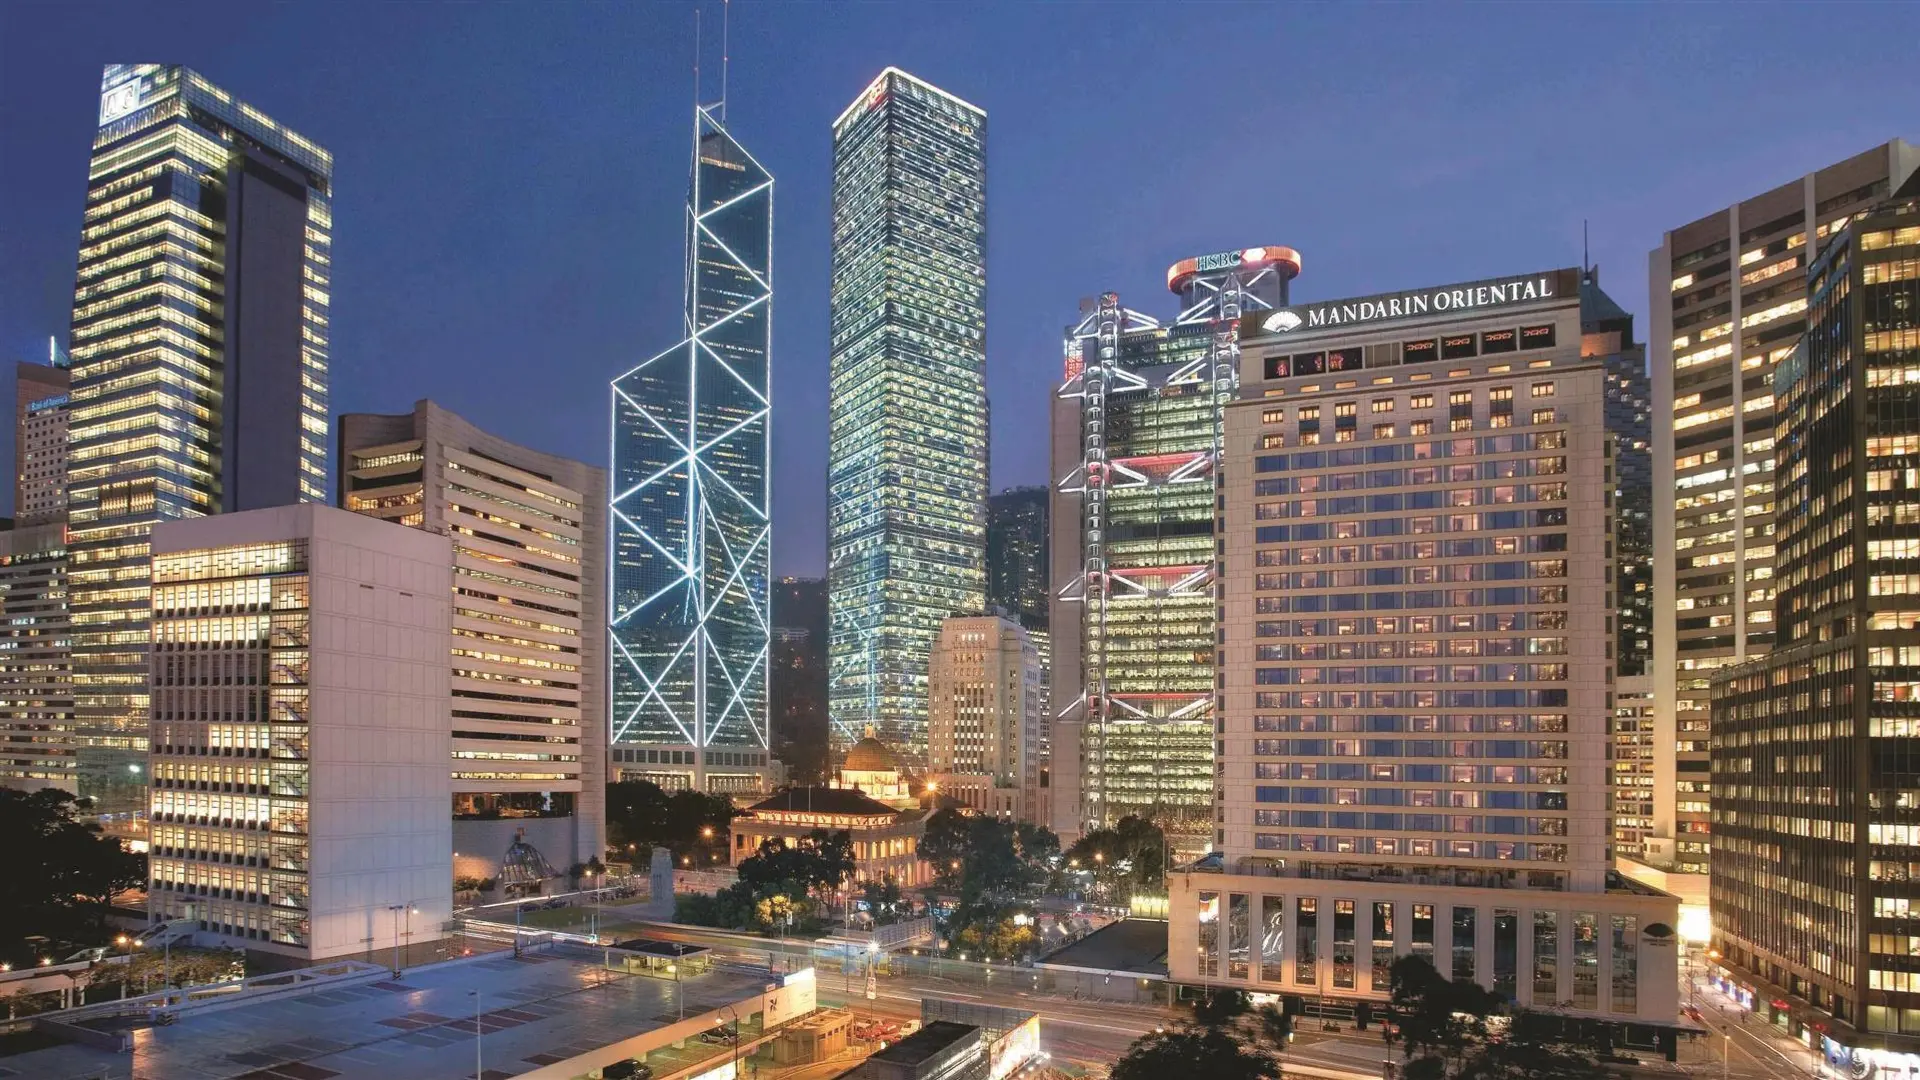 Hotel review Location' - Mandarin Oriental Hong Kong - 0